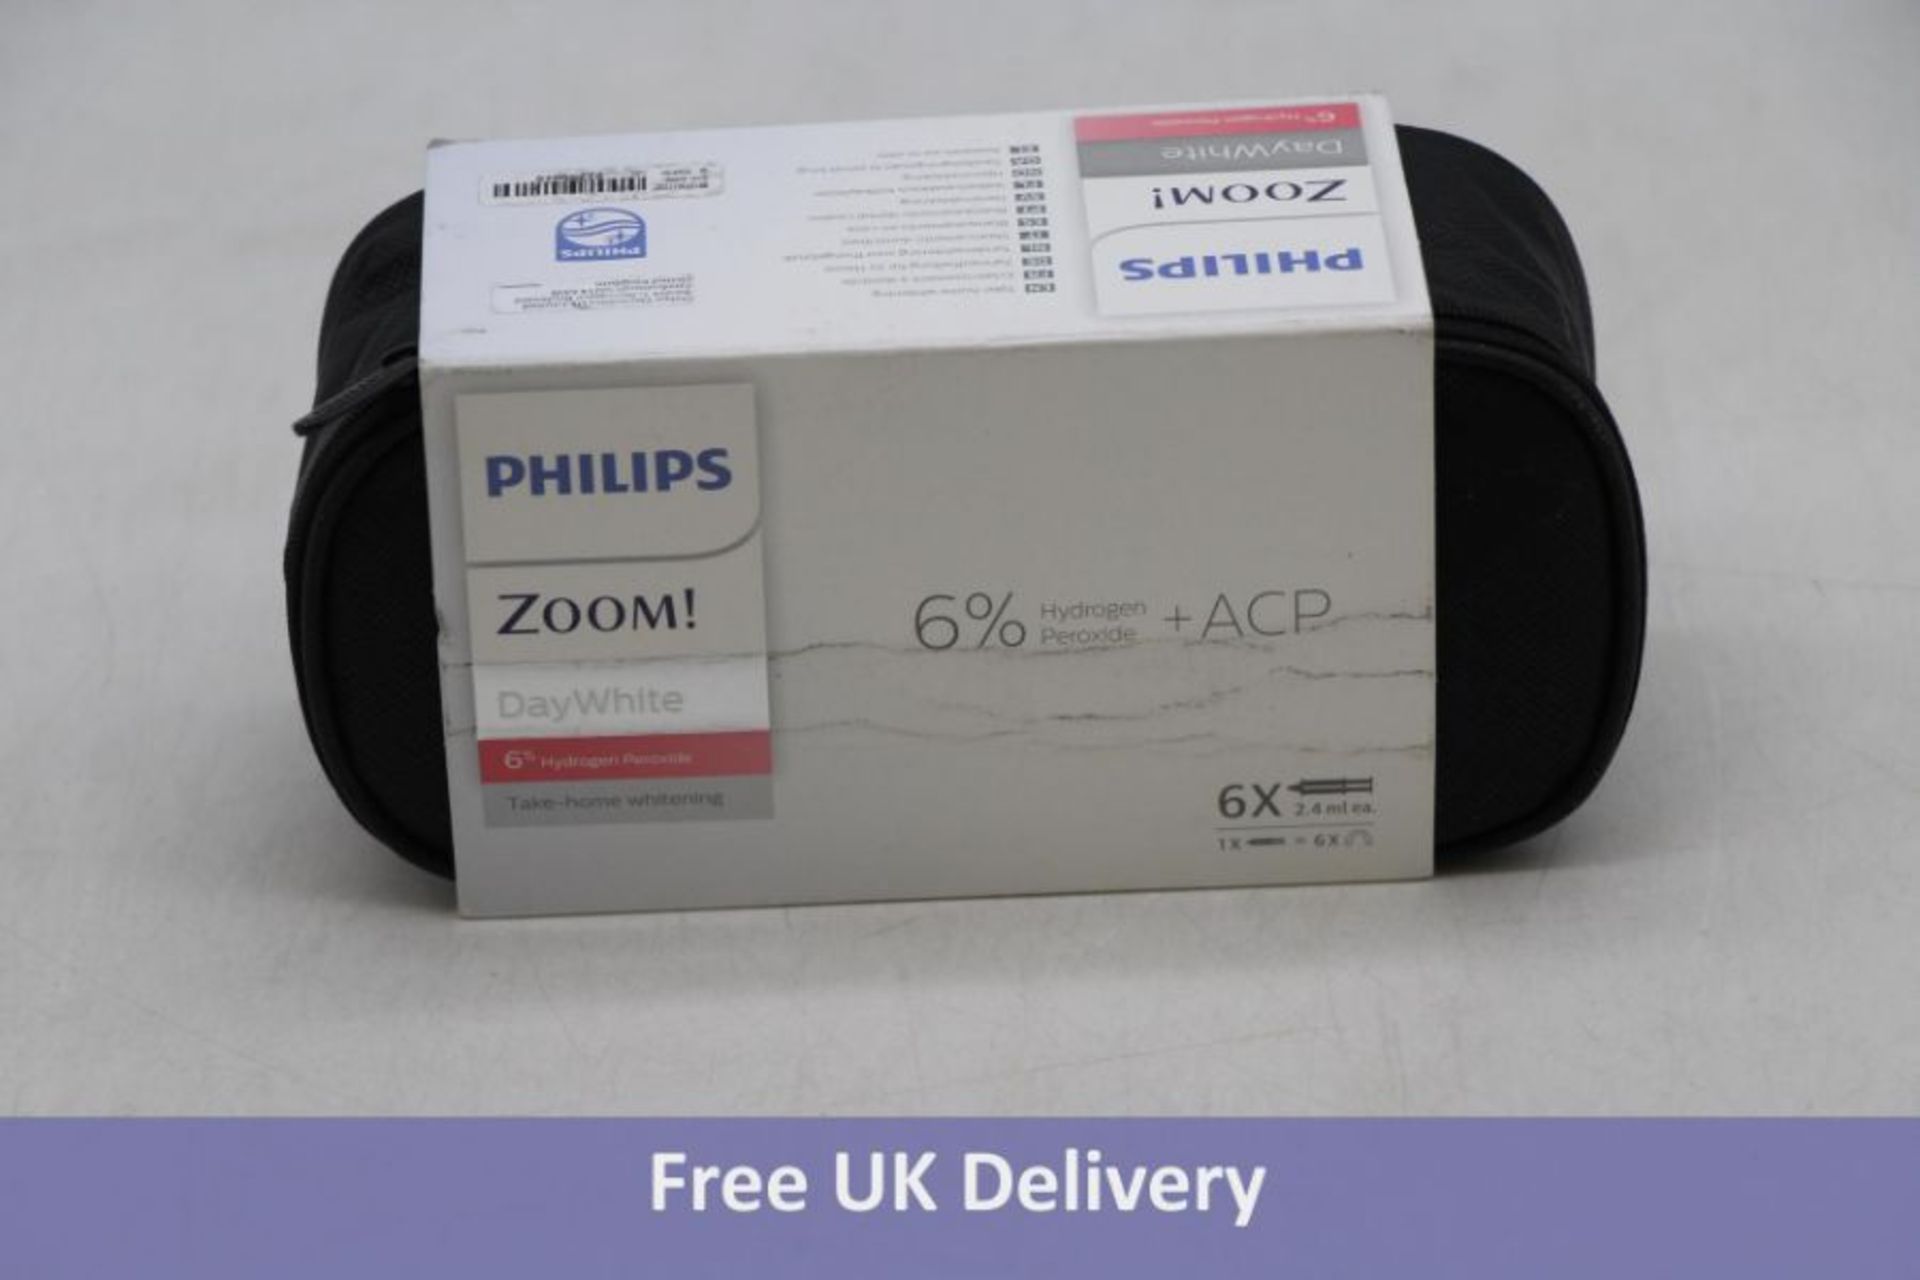 Philips Zoom Home Kit Day White, 6%, Expiry 01.2024